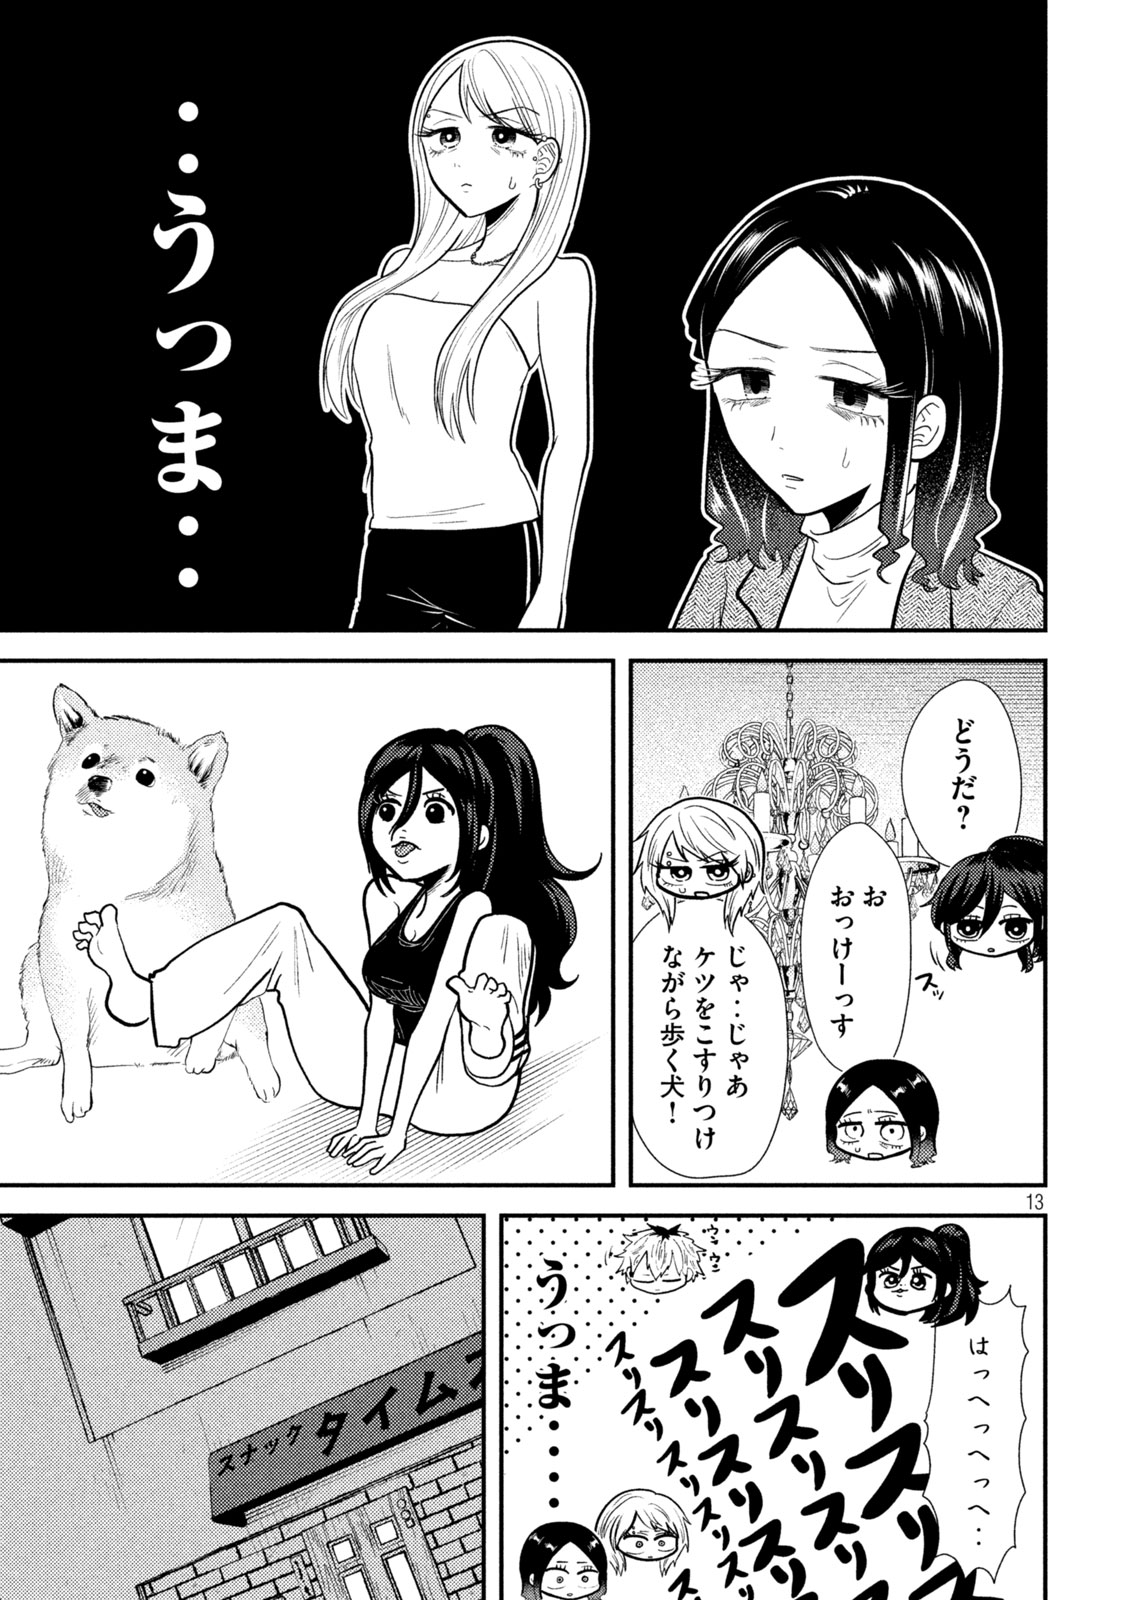 Heisei Haizanhei Sumire-chan - Chapter 21 - Page 13